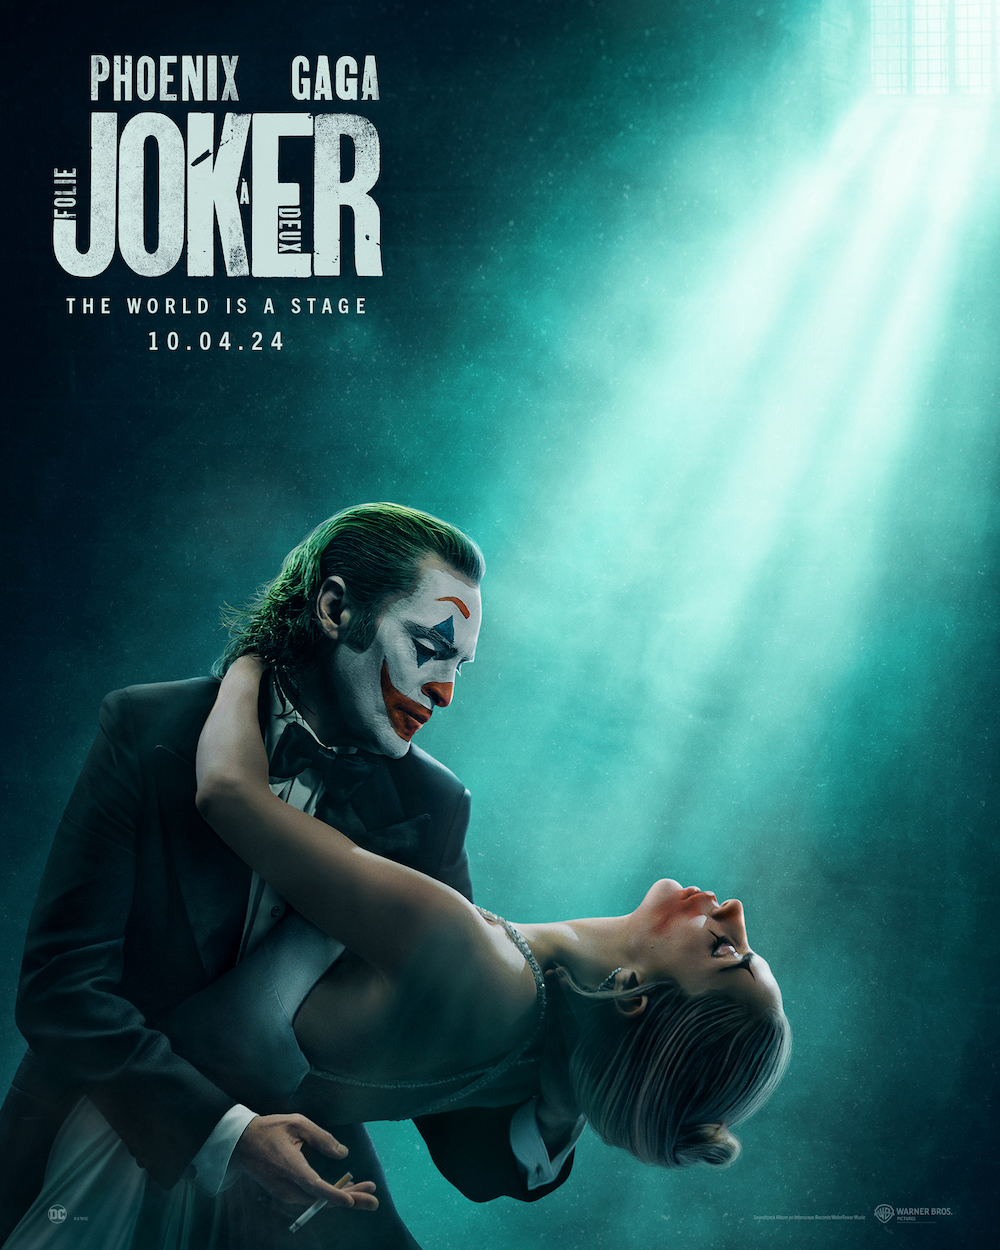 Joker 2 - The World Is A Stage - Phoenix | Gaga